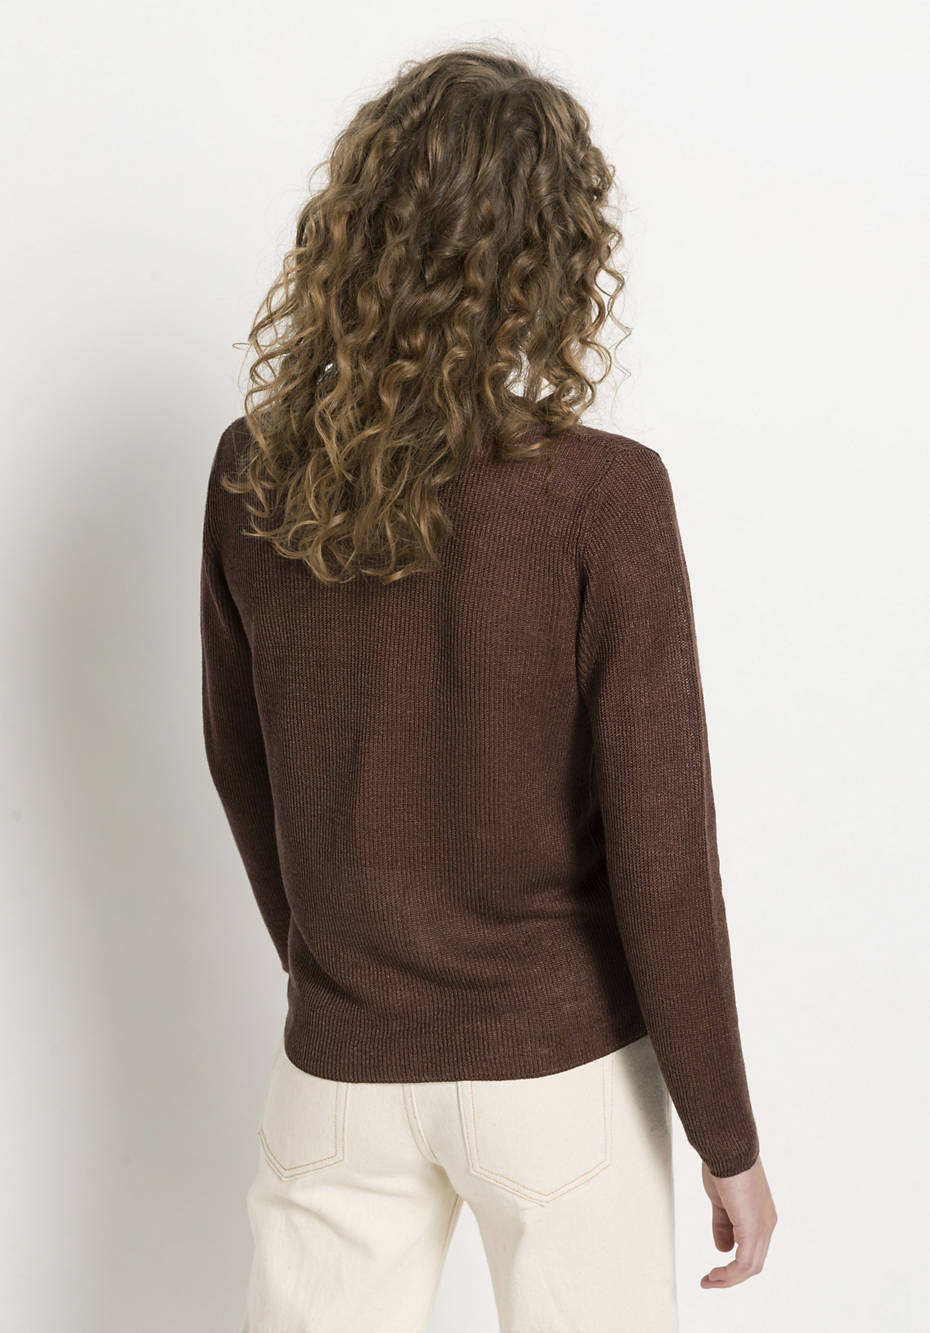 Pure organic linen V-neck sweater